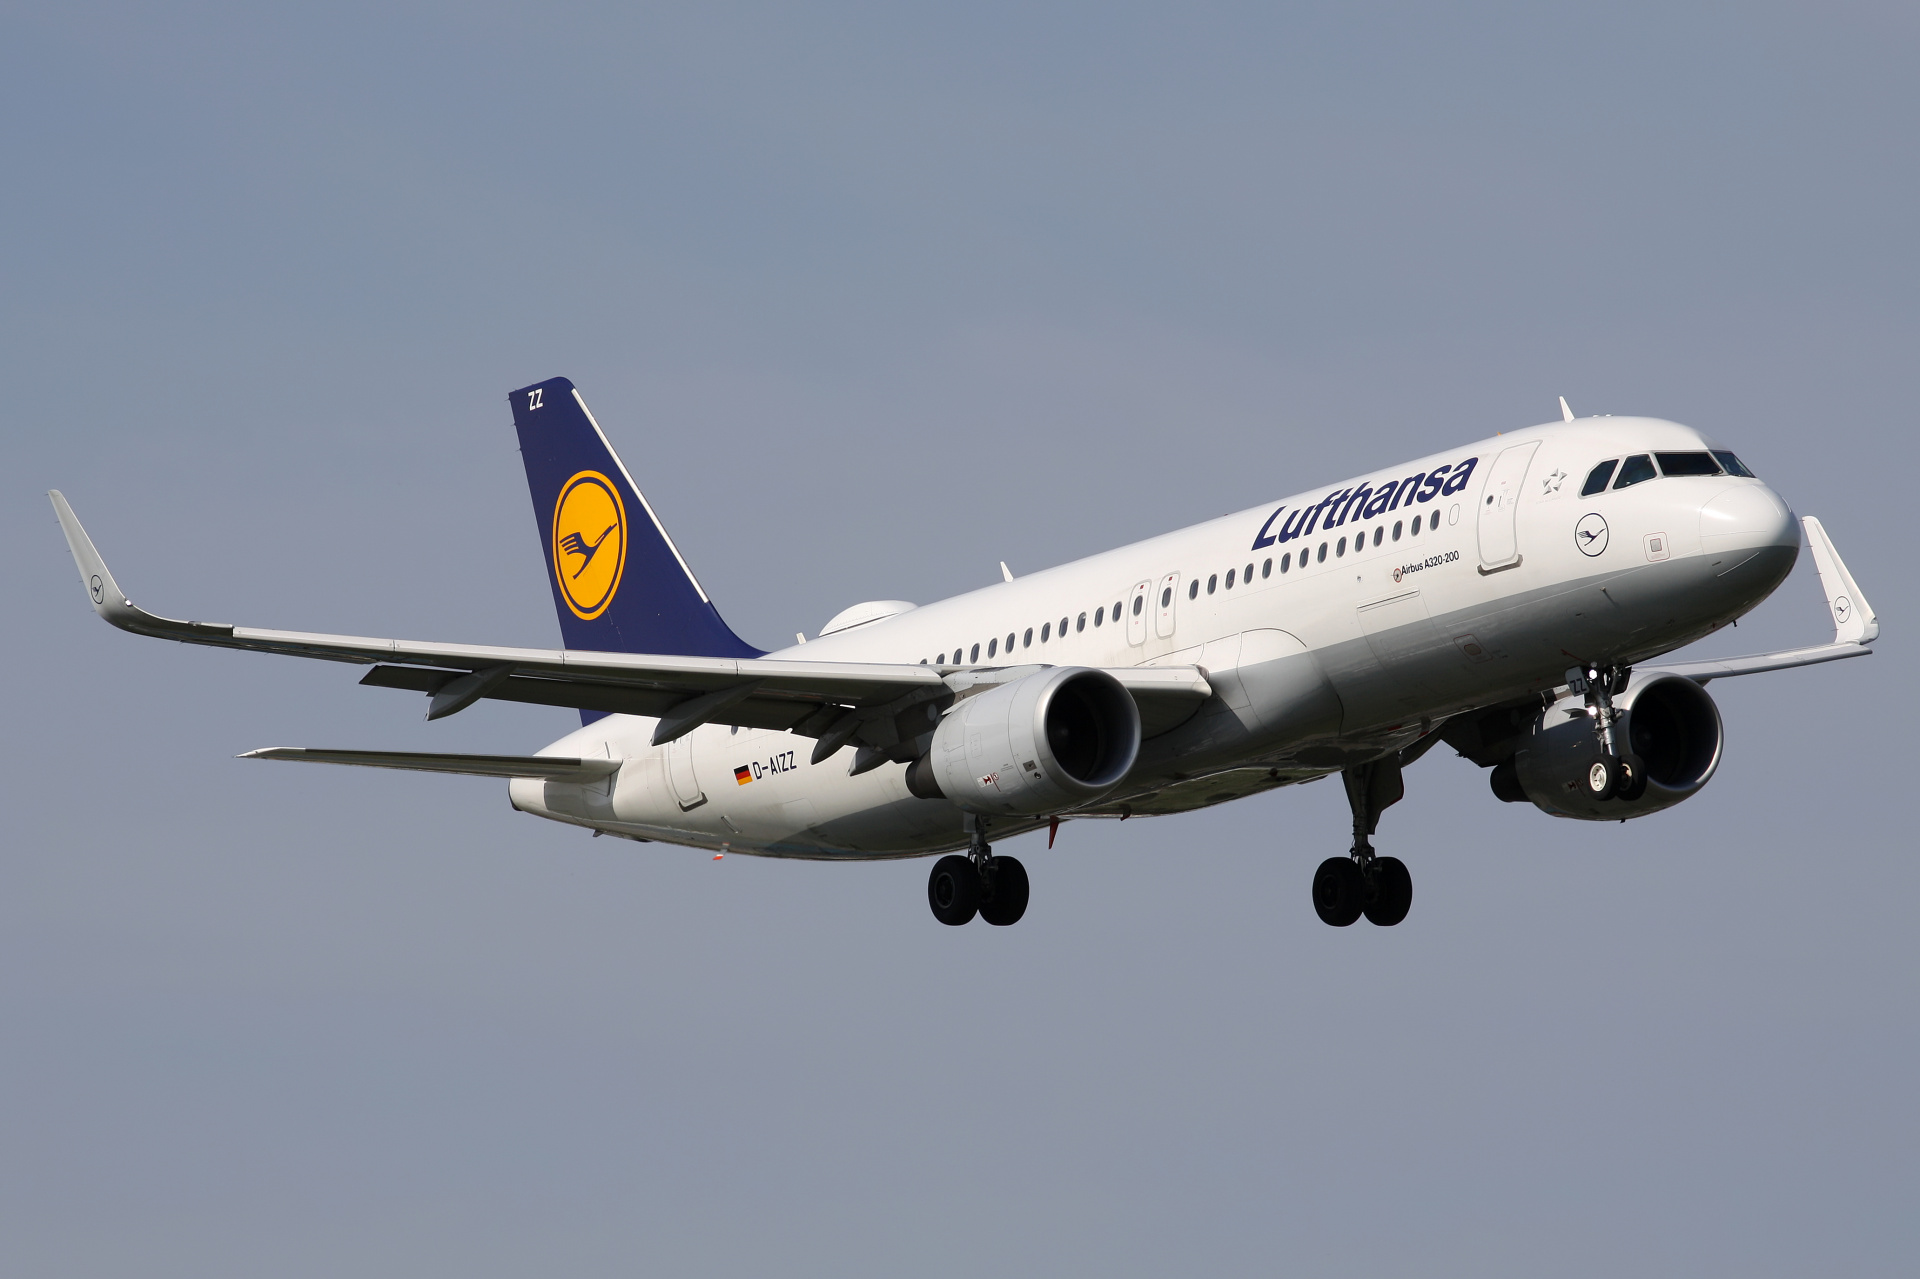 D-AIZZ (Aircraft » EPWA Spotting » Airbus A320-200 » Lufthansa)